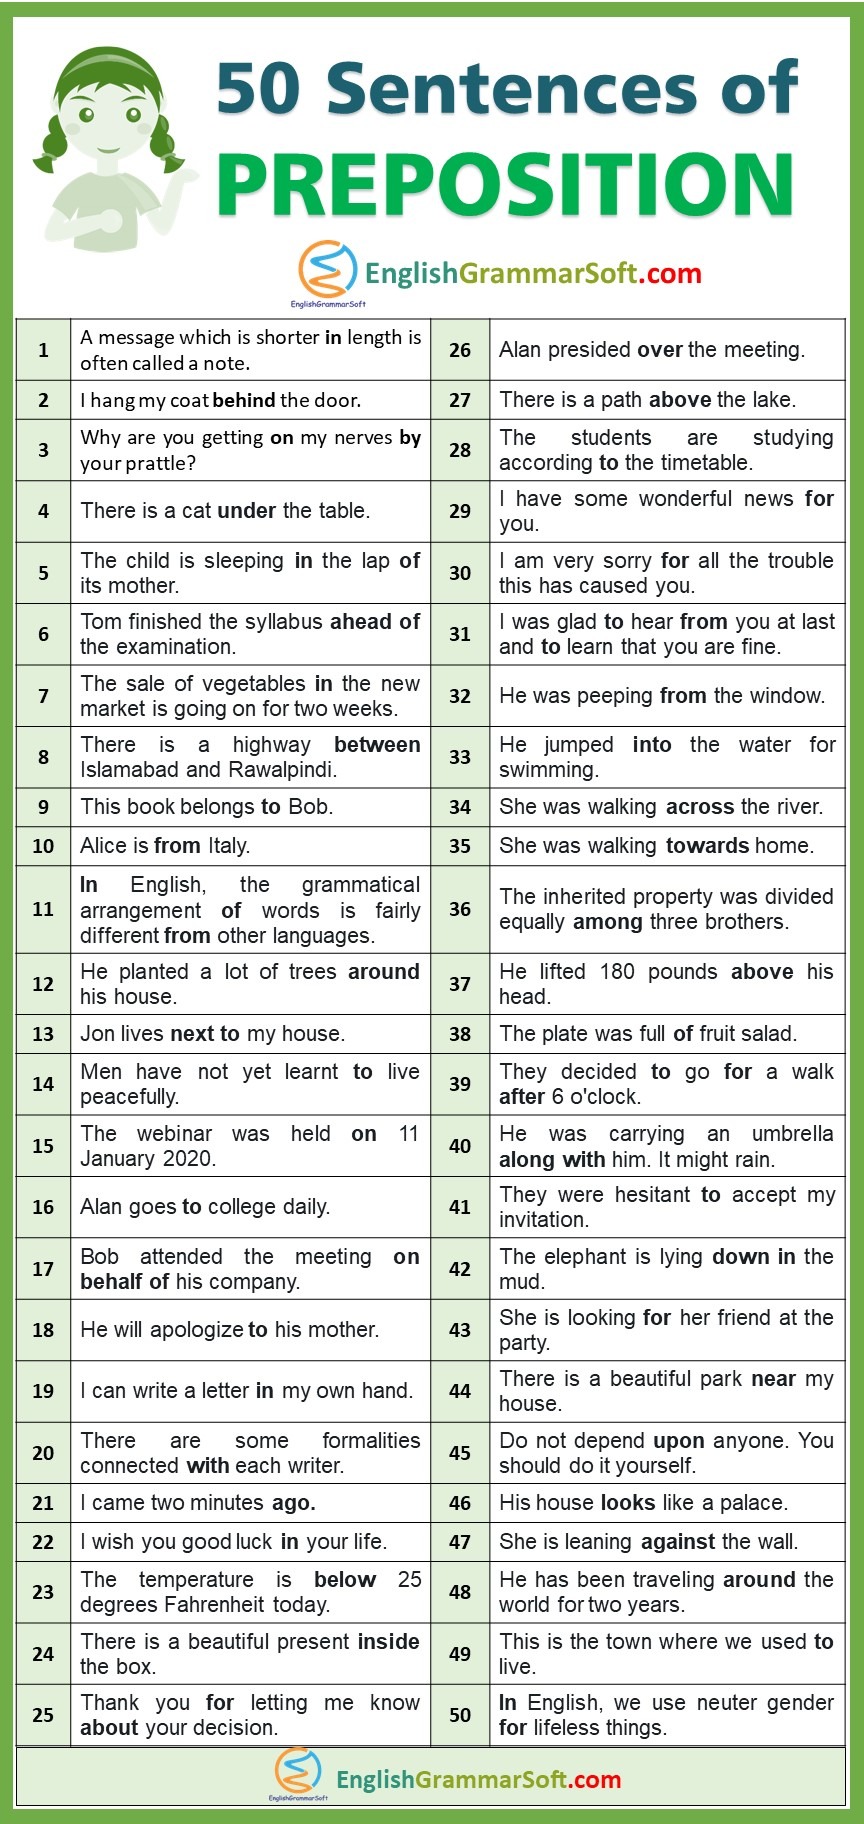 50 Sentences of Prepositions